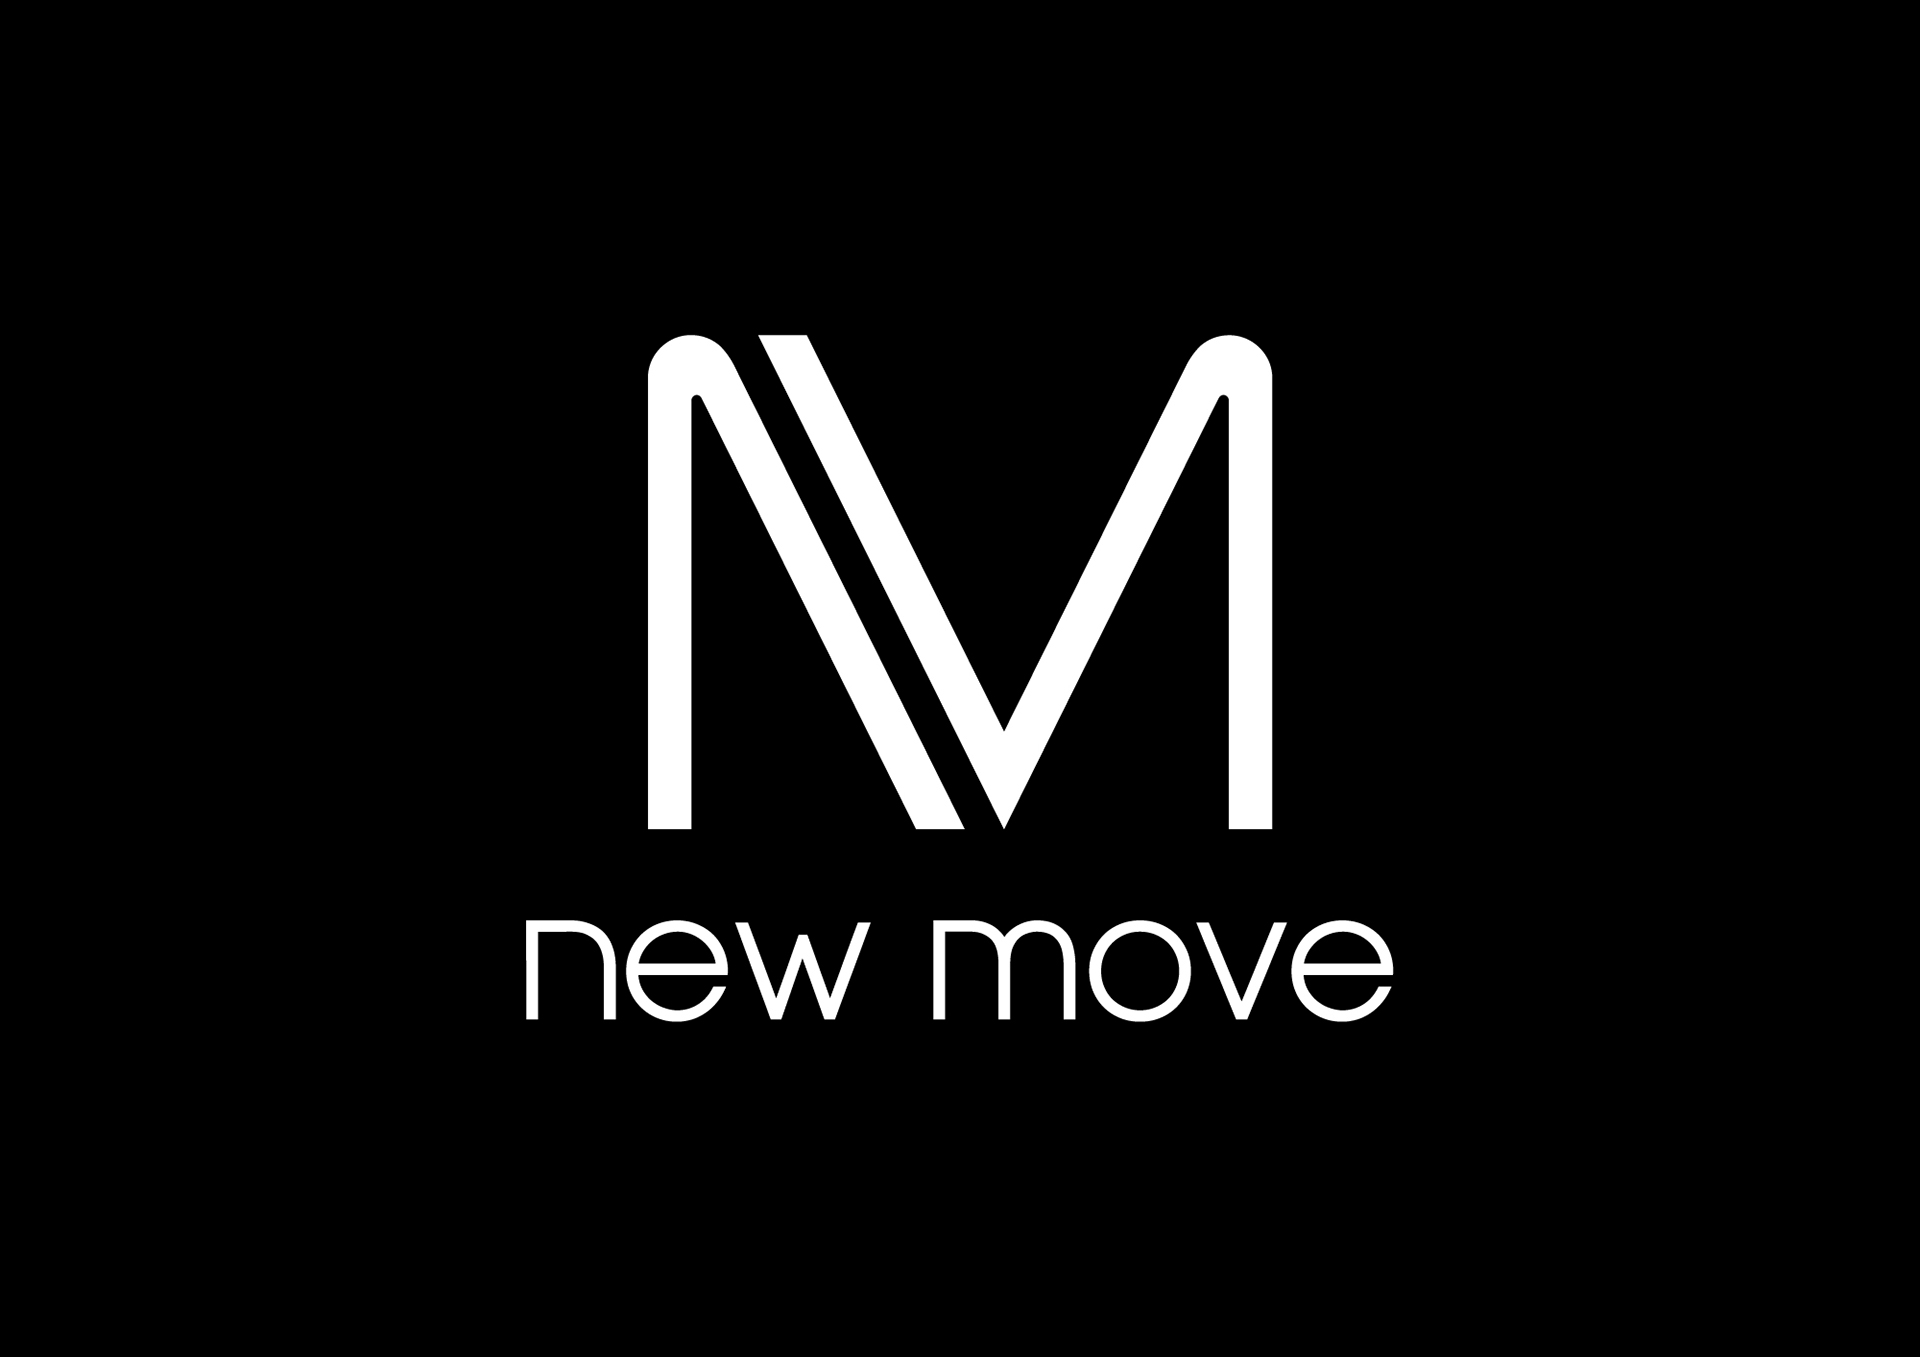 Make new moves. New move.